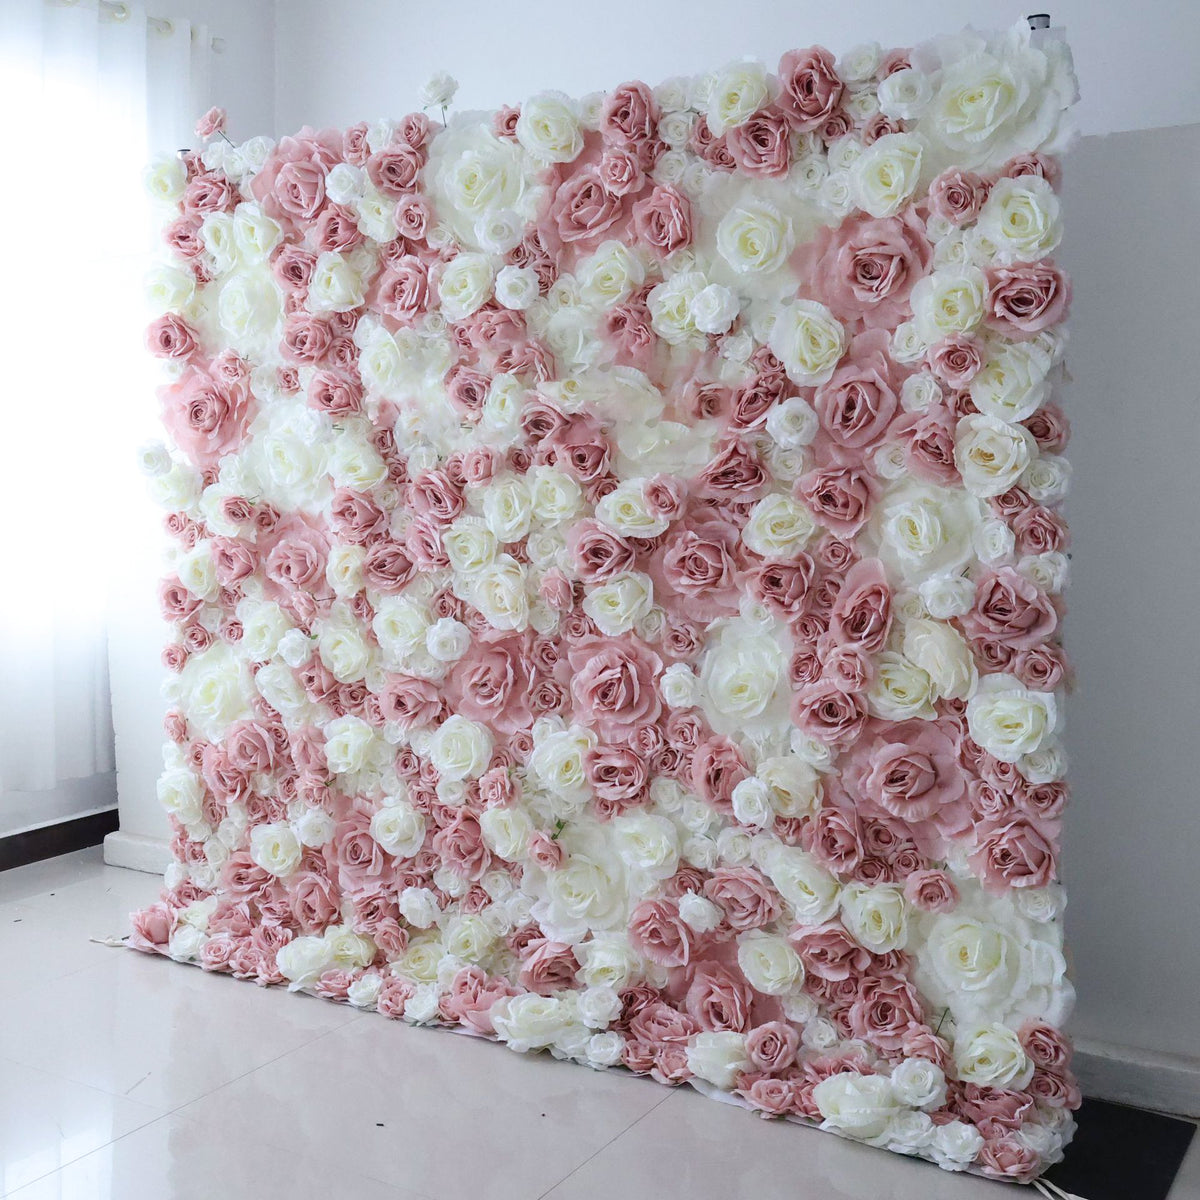 3D Artificial Flower Wall Arrangement Wedding Party Birthday Backdrop Decor HQ1315